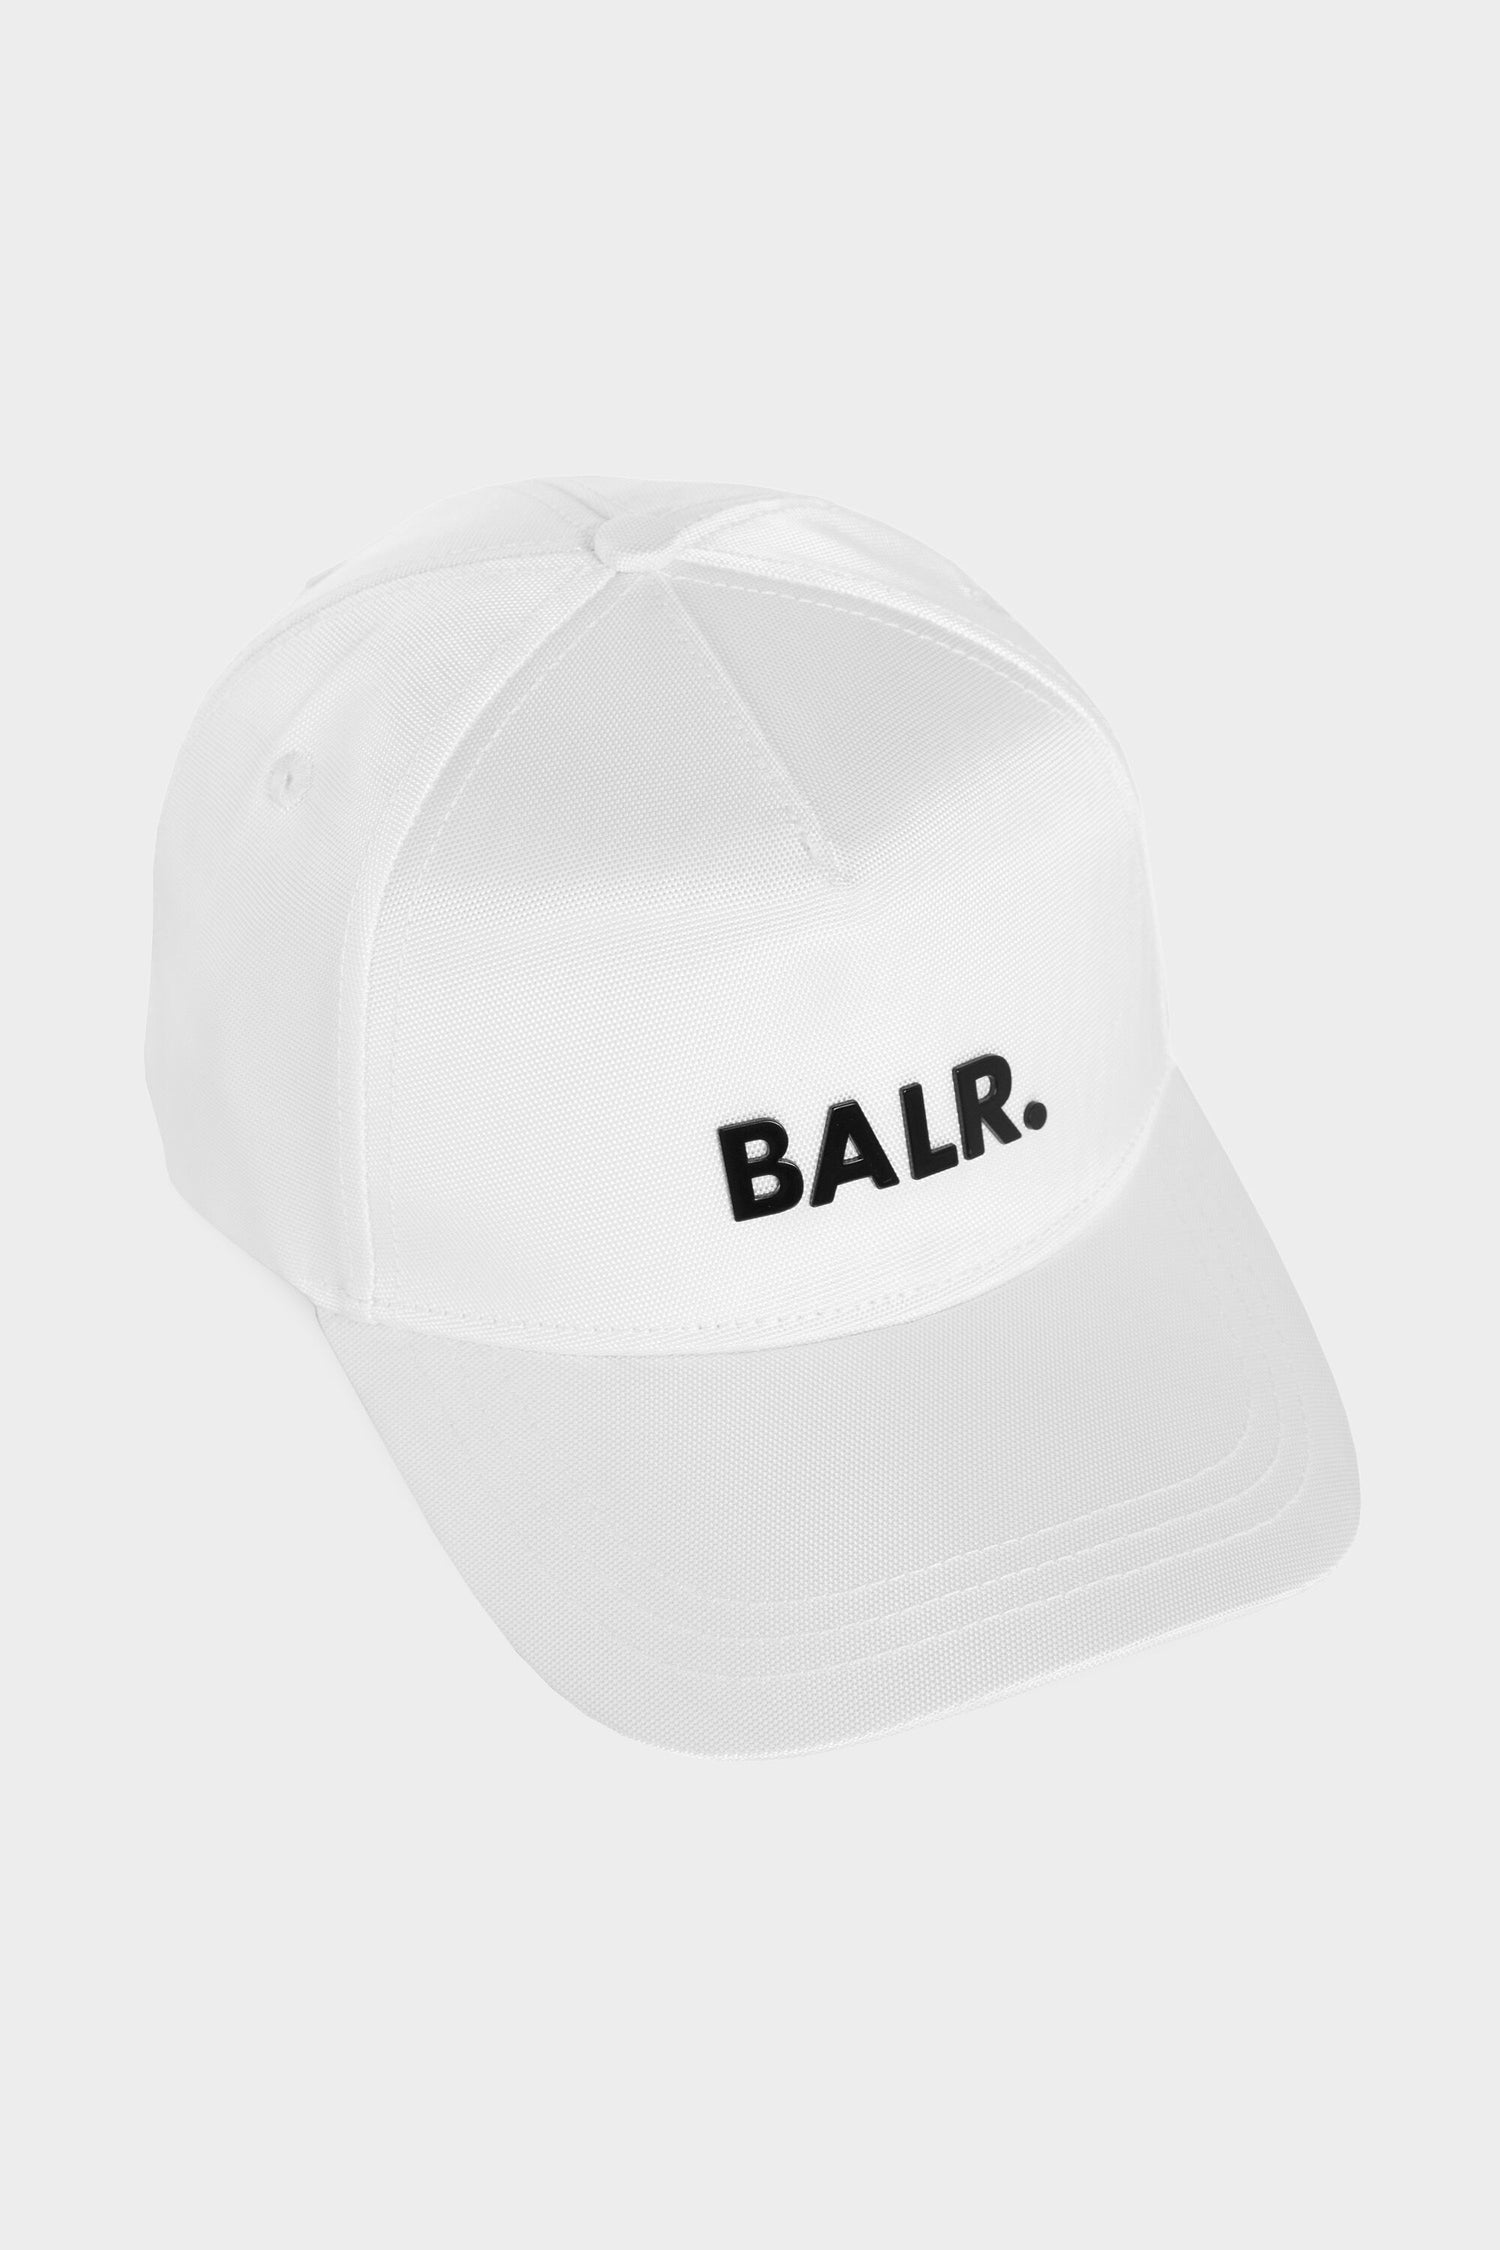 Oxford Cap White – BALR.